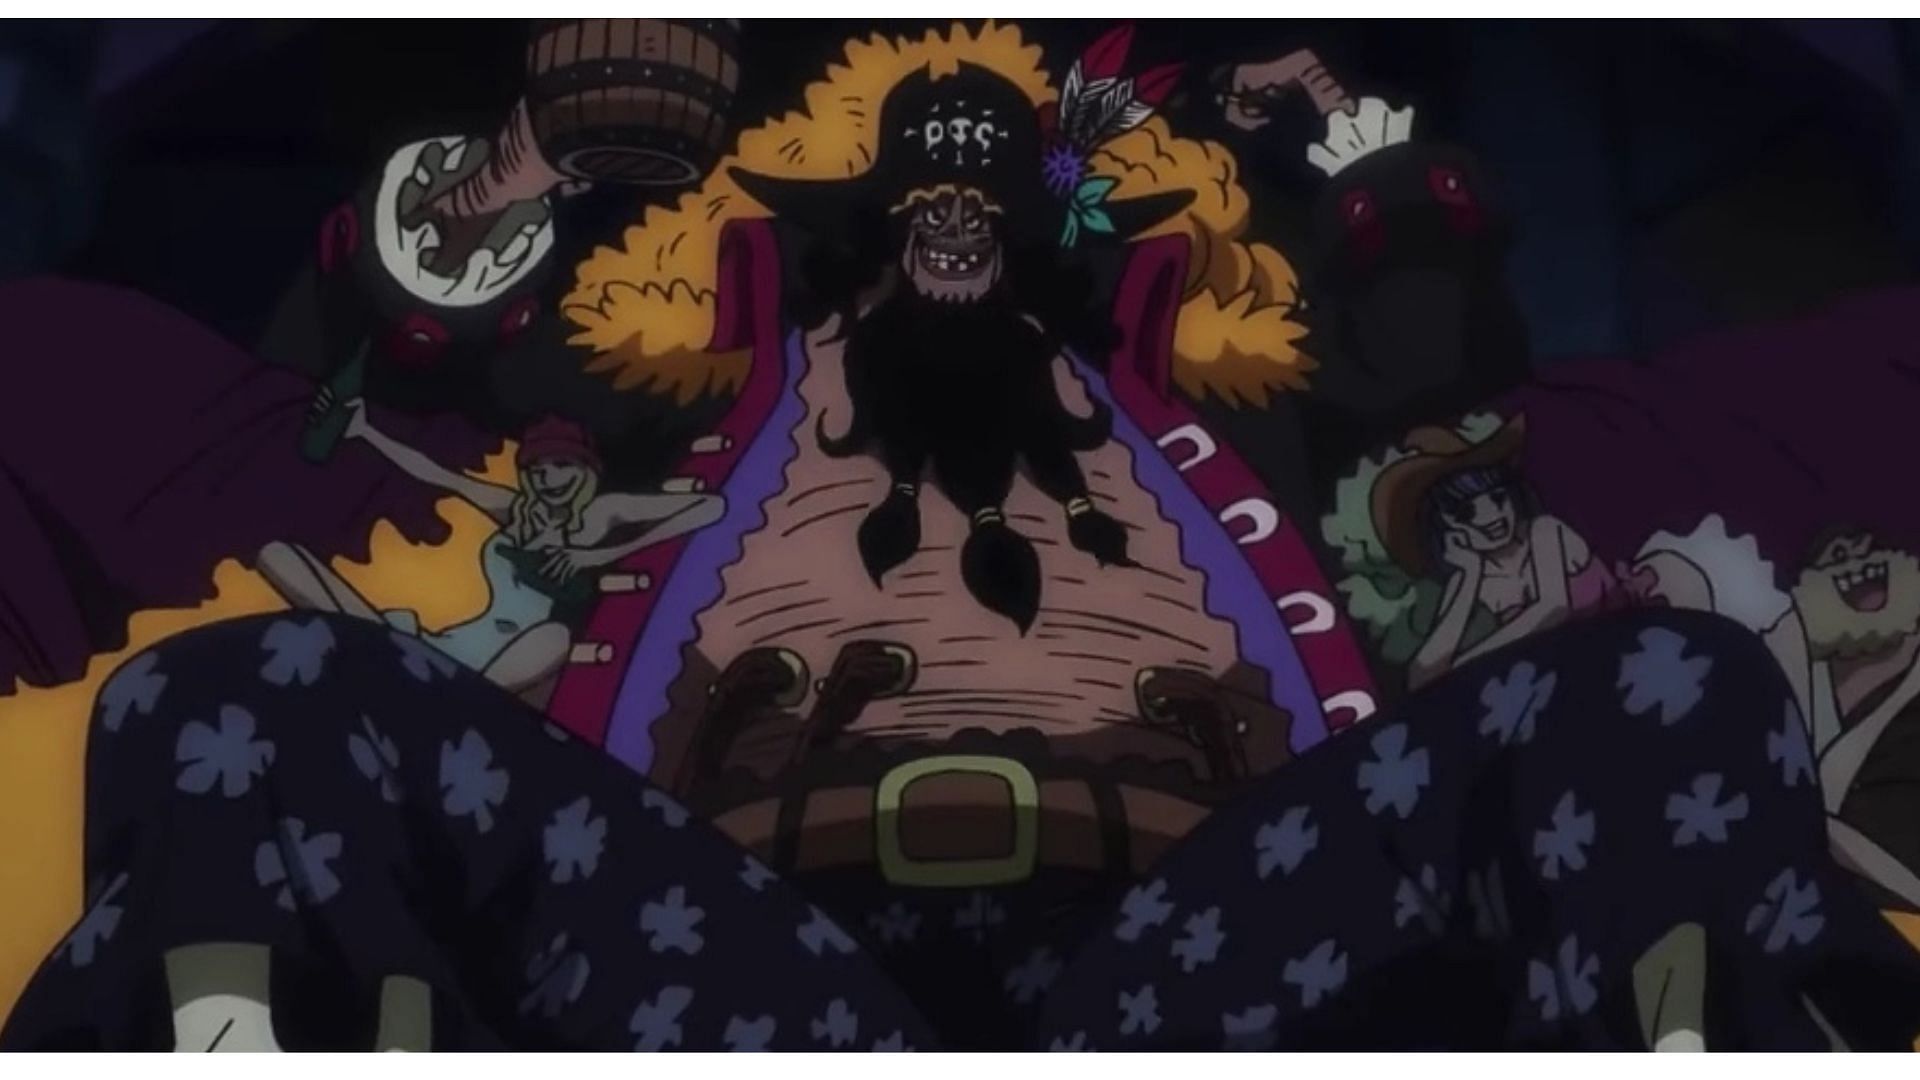 Blackbeard as seen in One Piece anime (Image via Toei Animation)